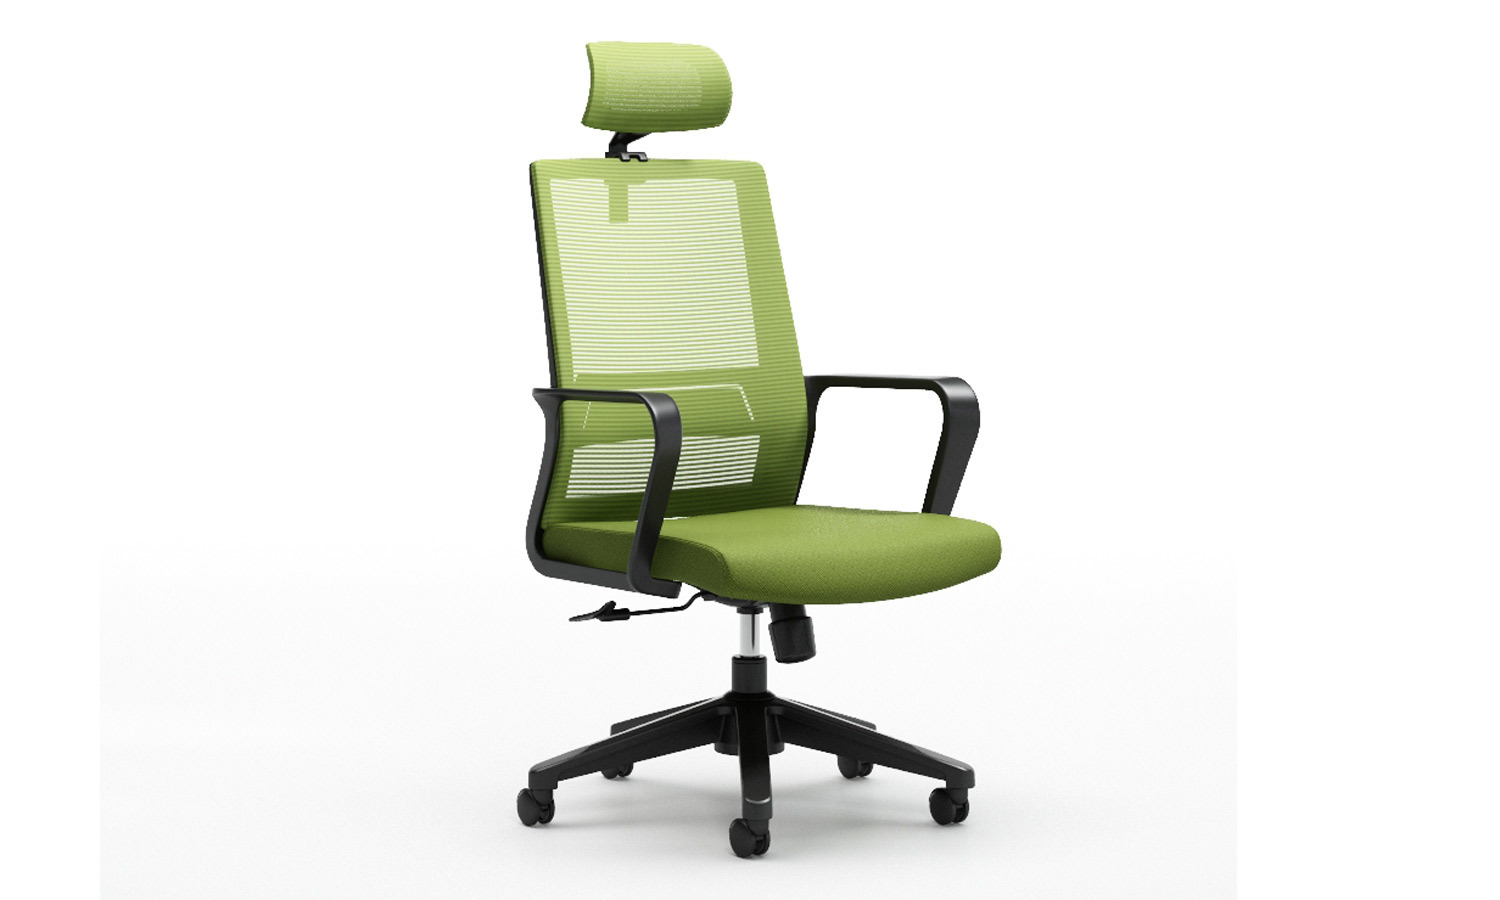 DX6934 Executive chair